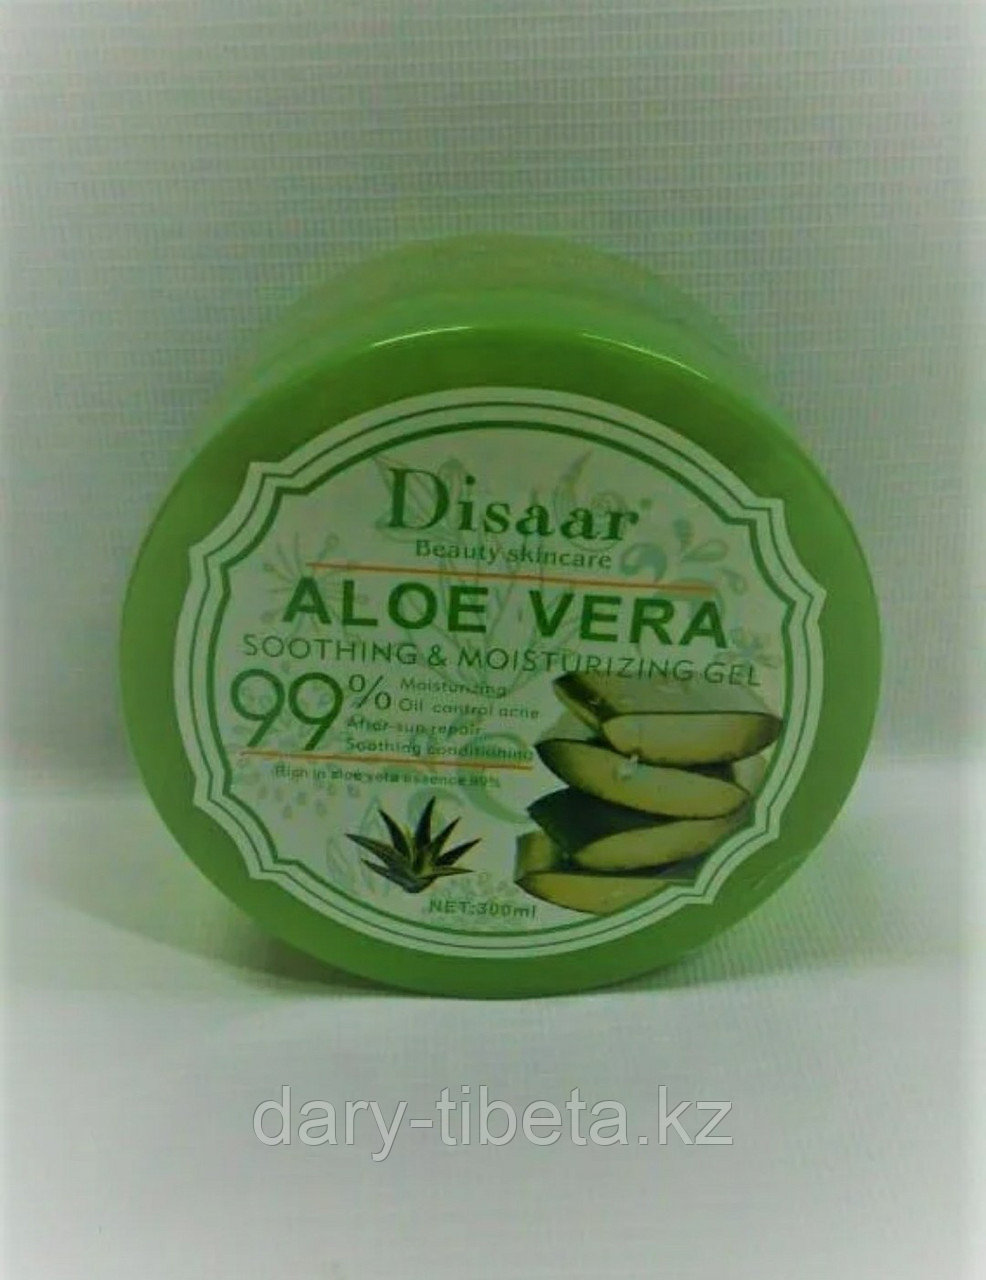 Disaar 99% - Успокаивающий гель Aloe Vera